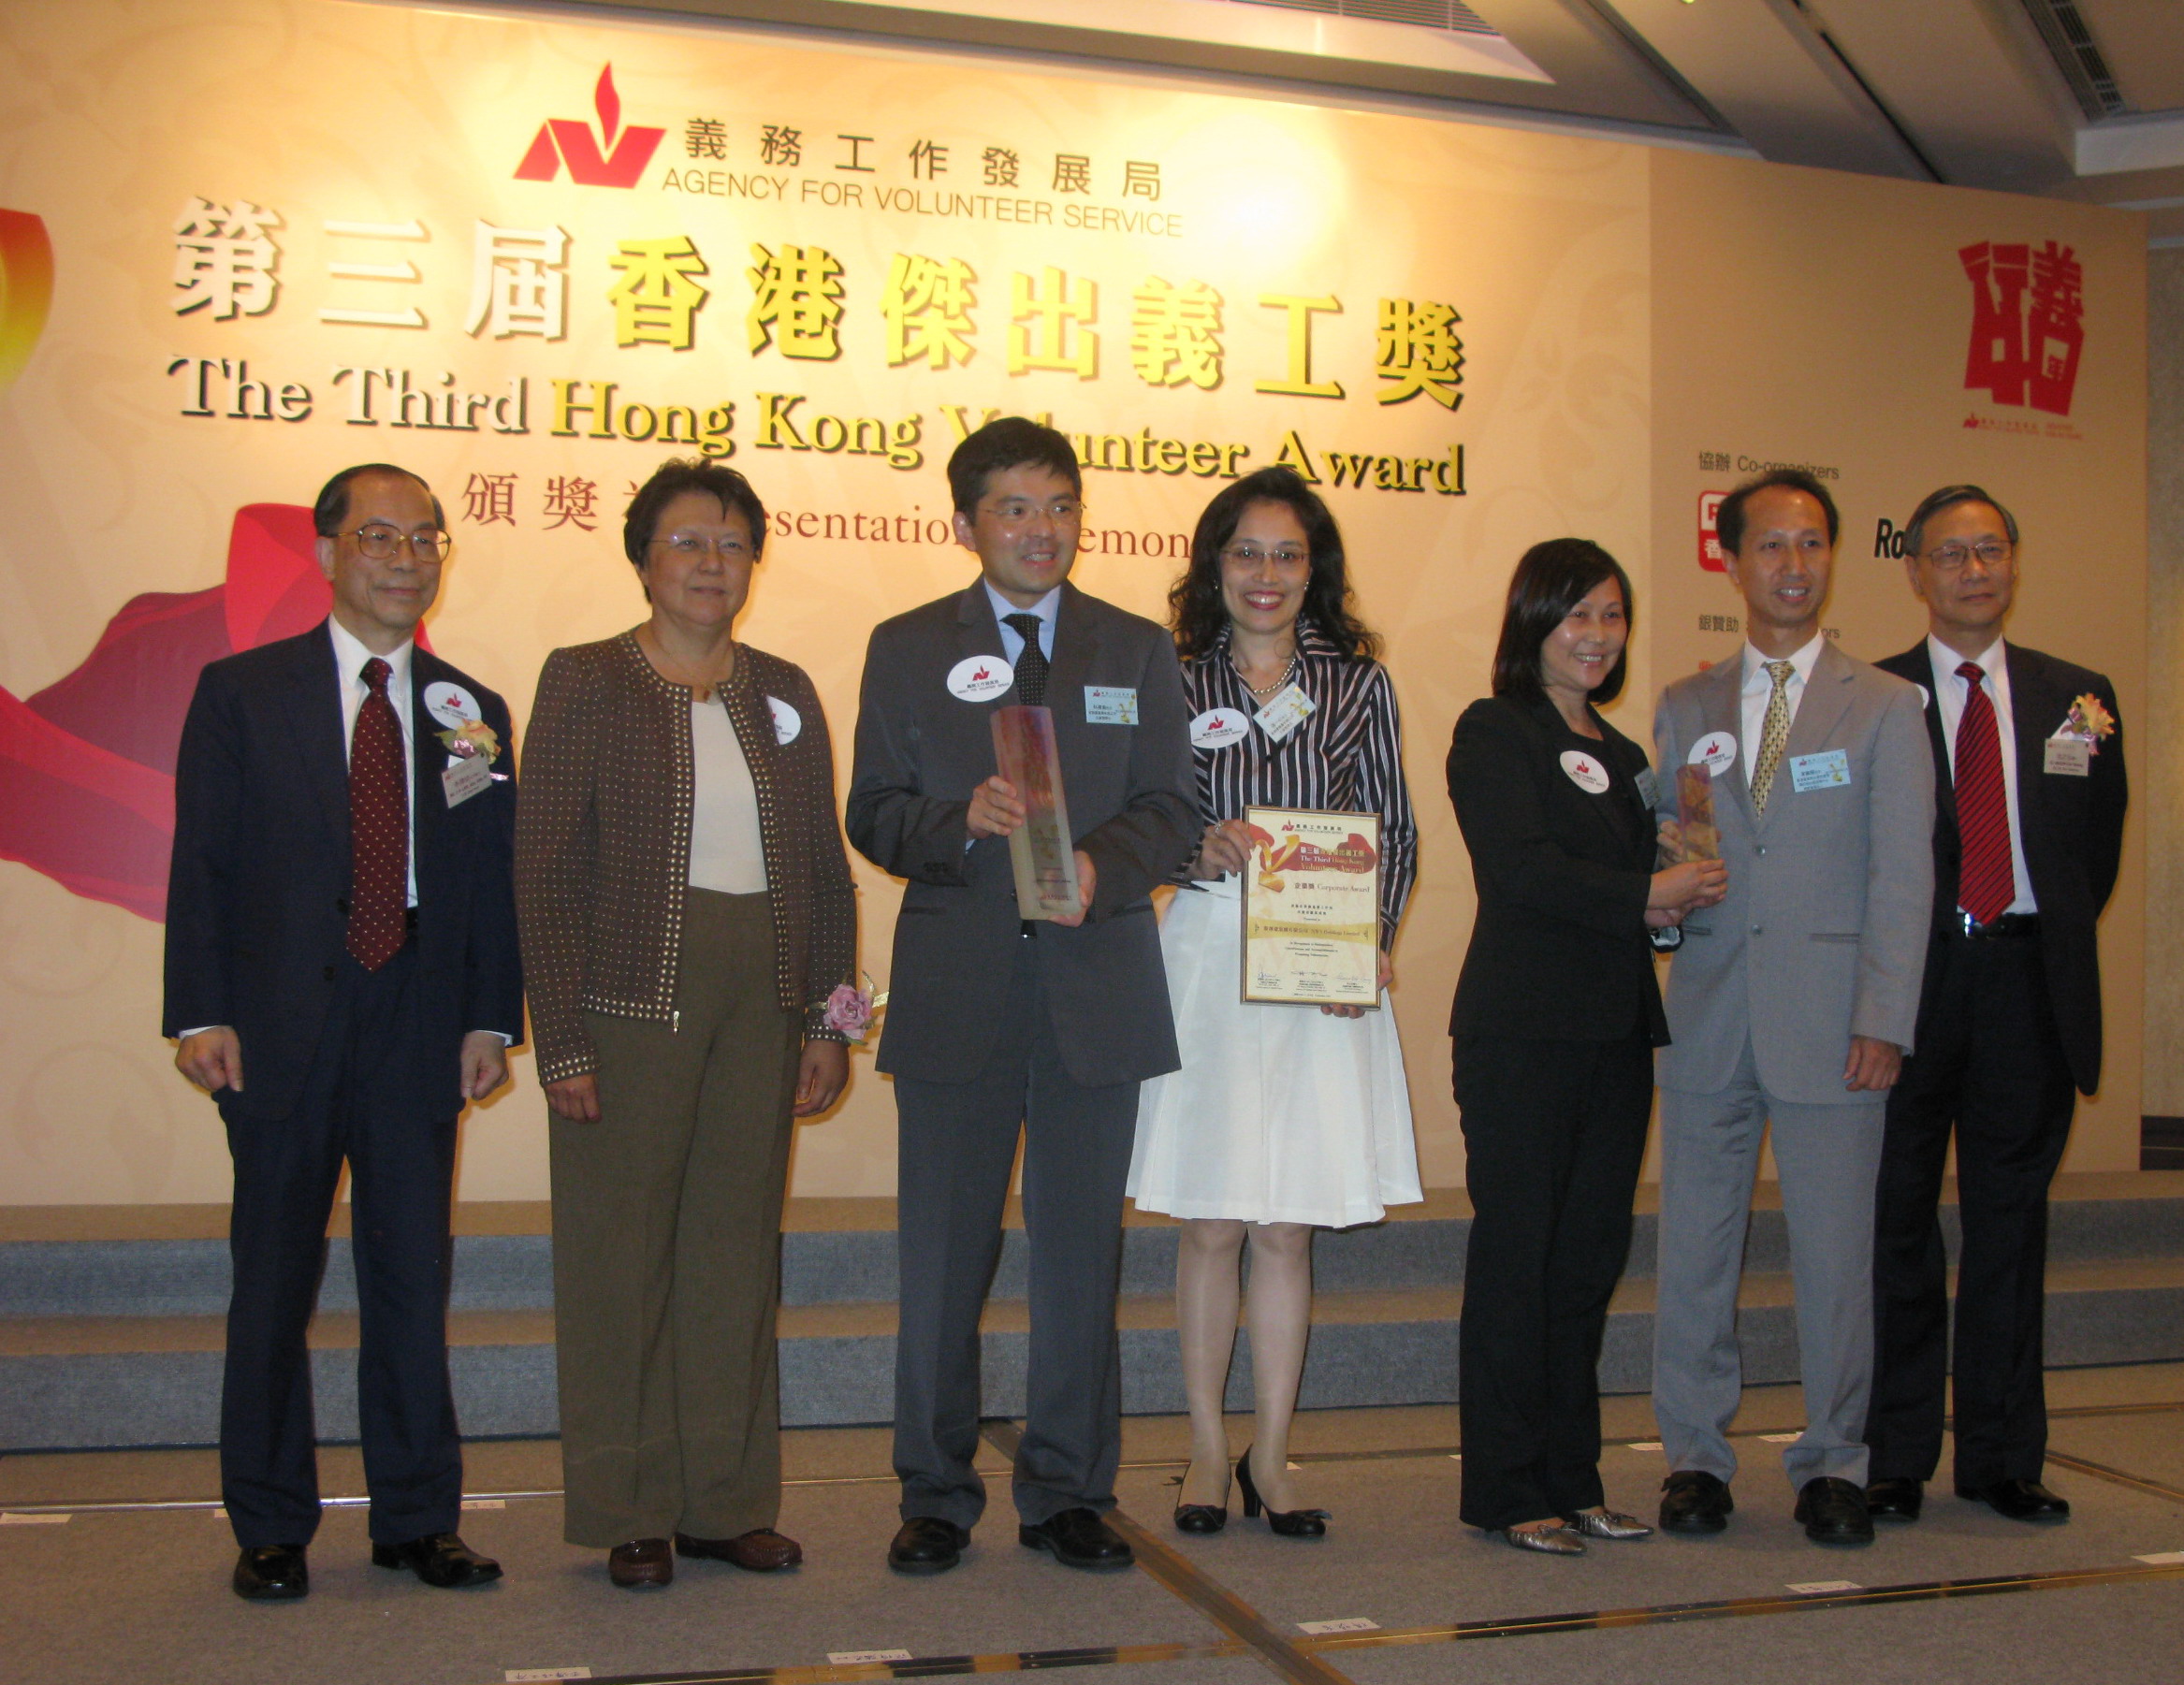 NWS Holdings garnered Hong Kong Volunteer Award (Corporate Award)